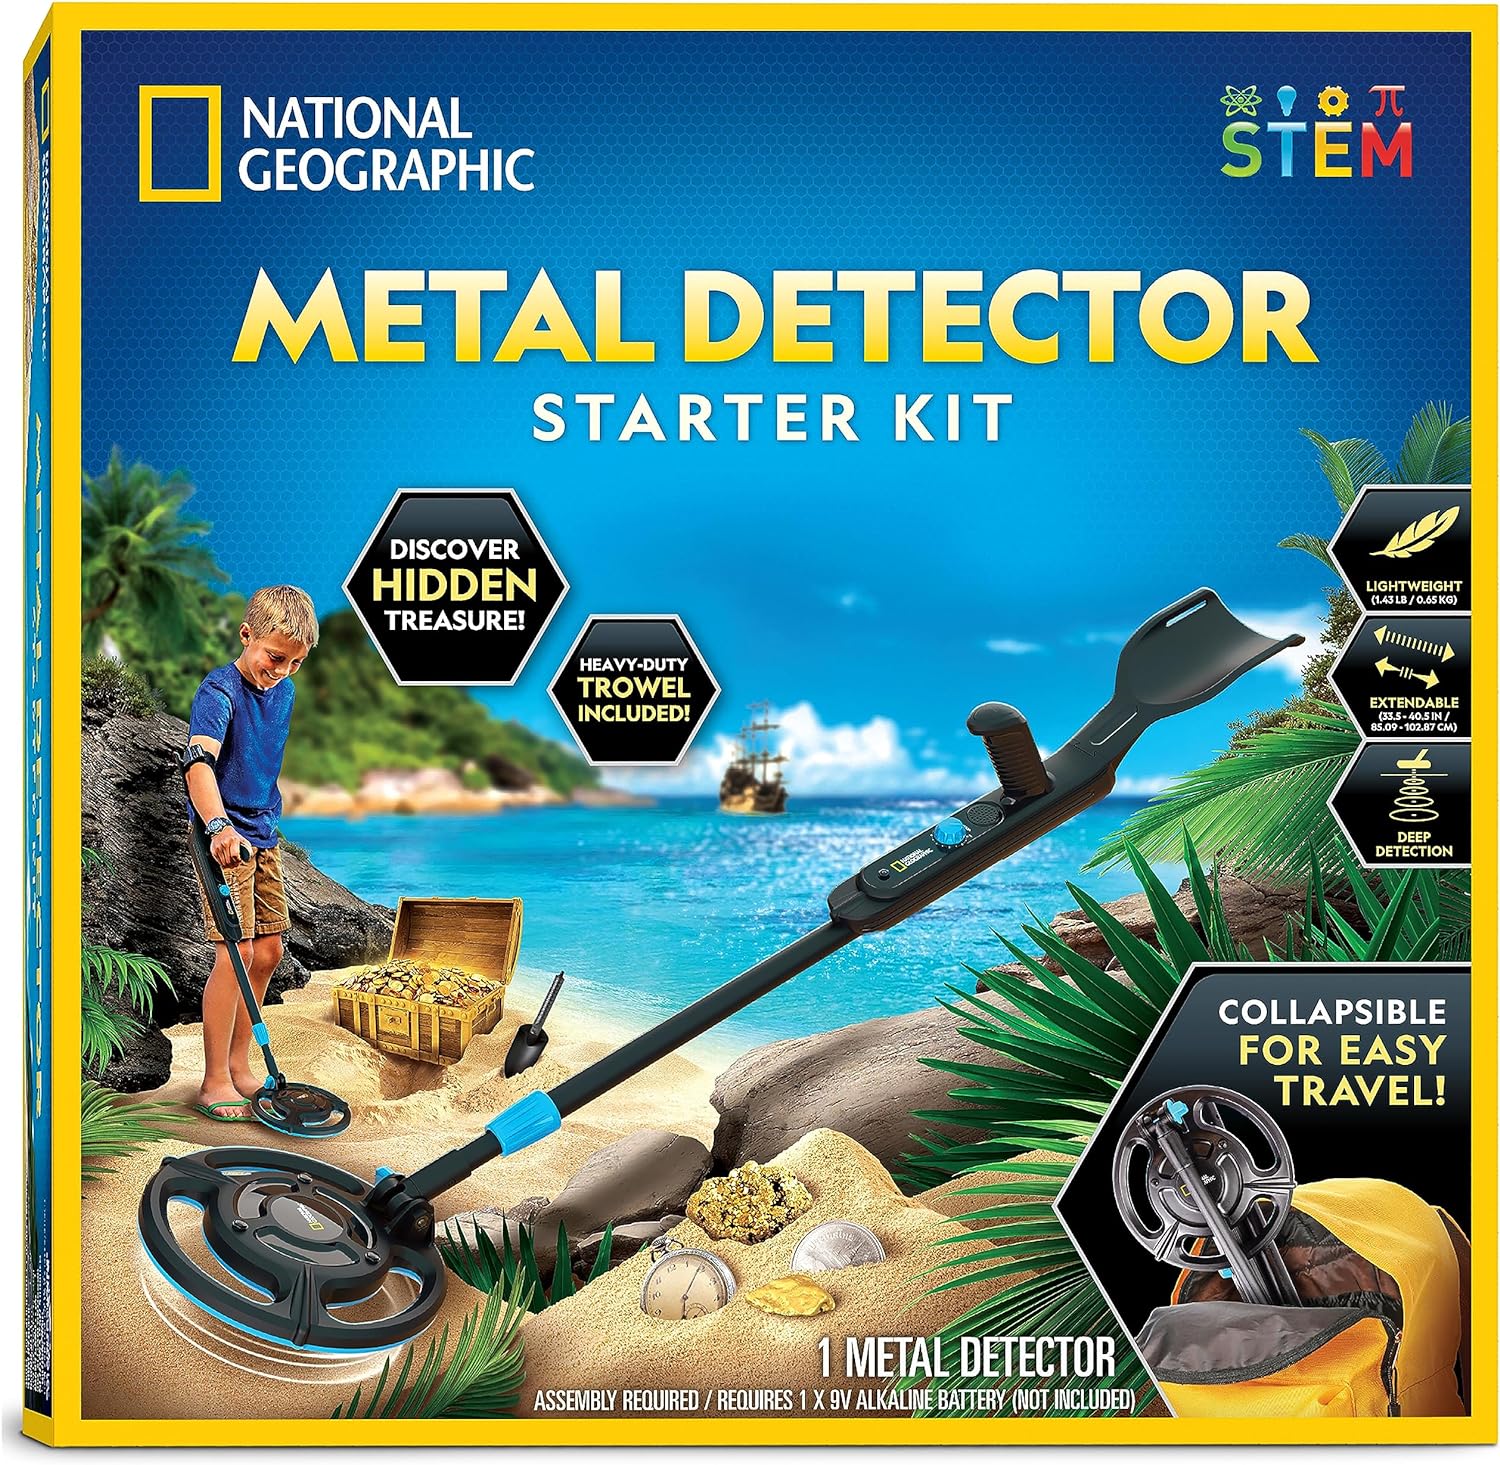 NATIONAL GEOGRAPHIC Starter Metal Detector Kit for Kids - Kids Metal Detector with 7.4 Waterproof Metal Detector Coil Trowel, Lightweight Gold Detector, Beach Metal Detector, Kids Metal Detector